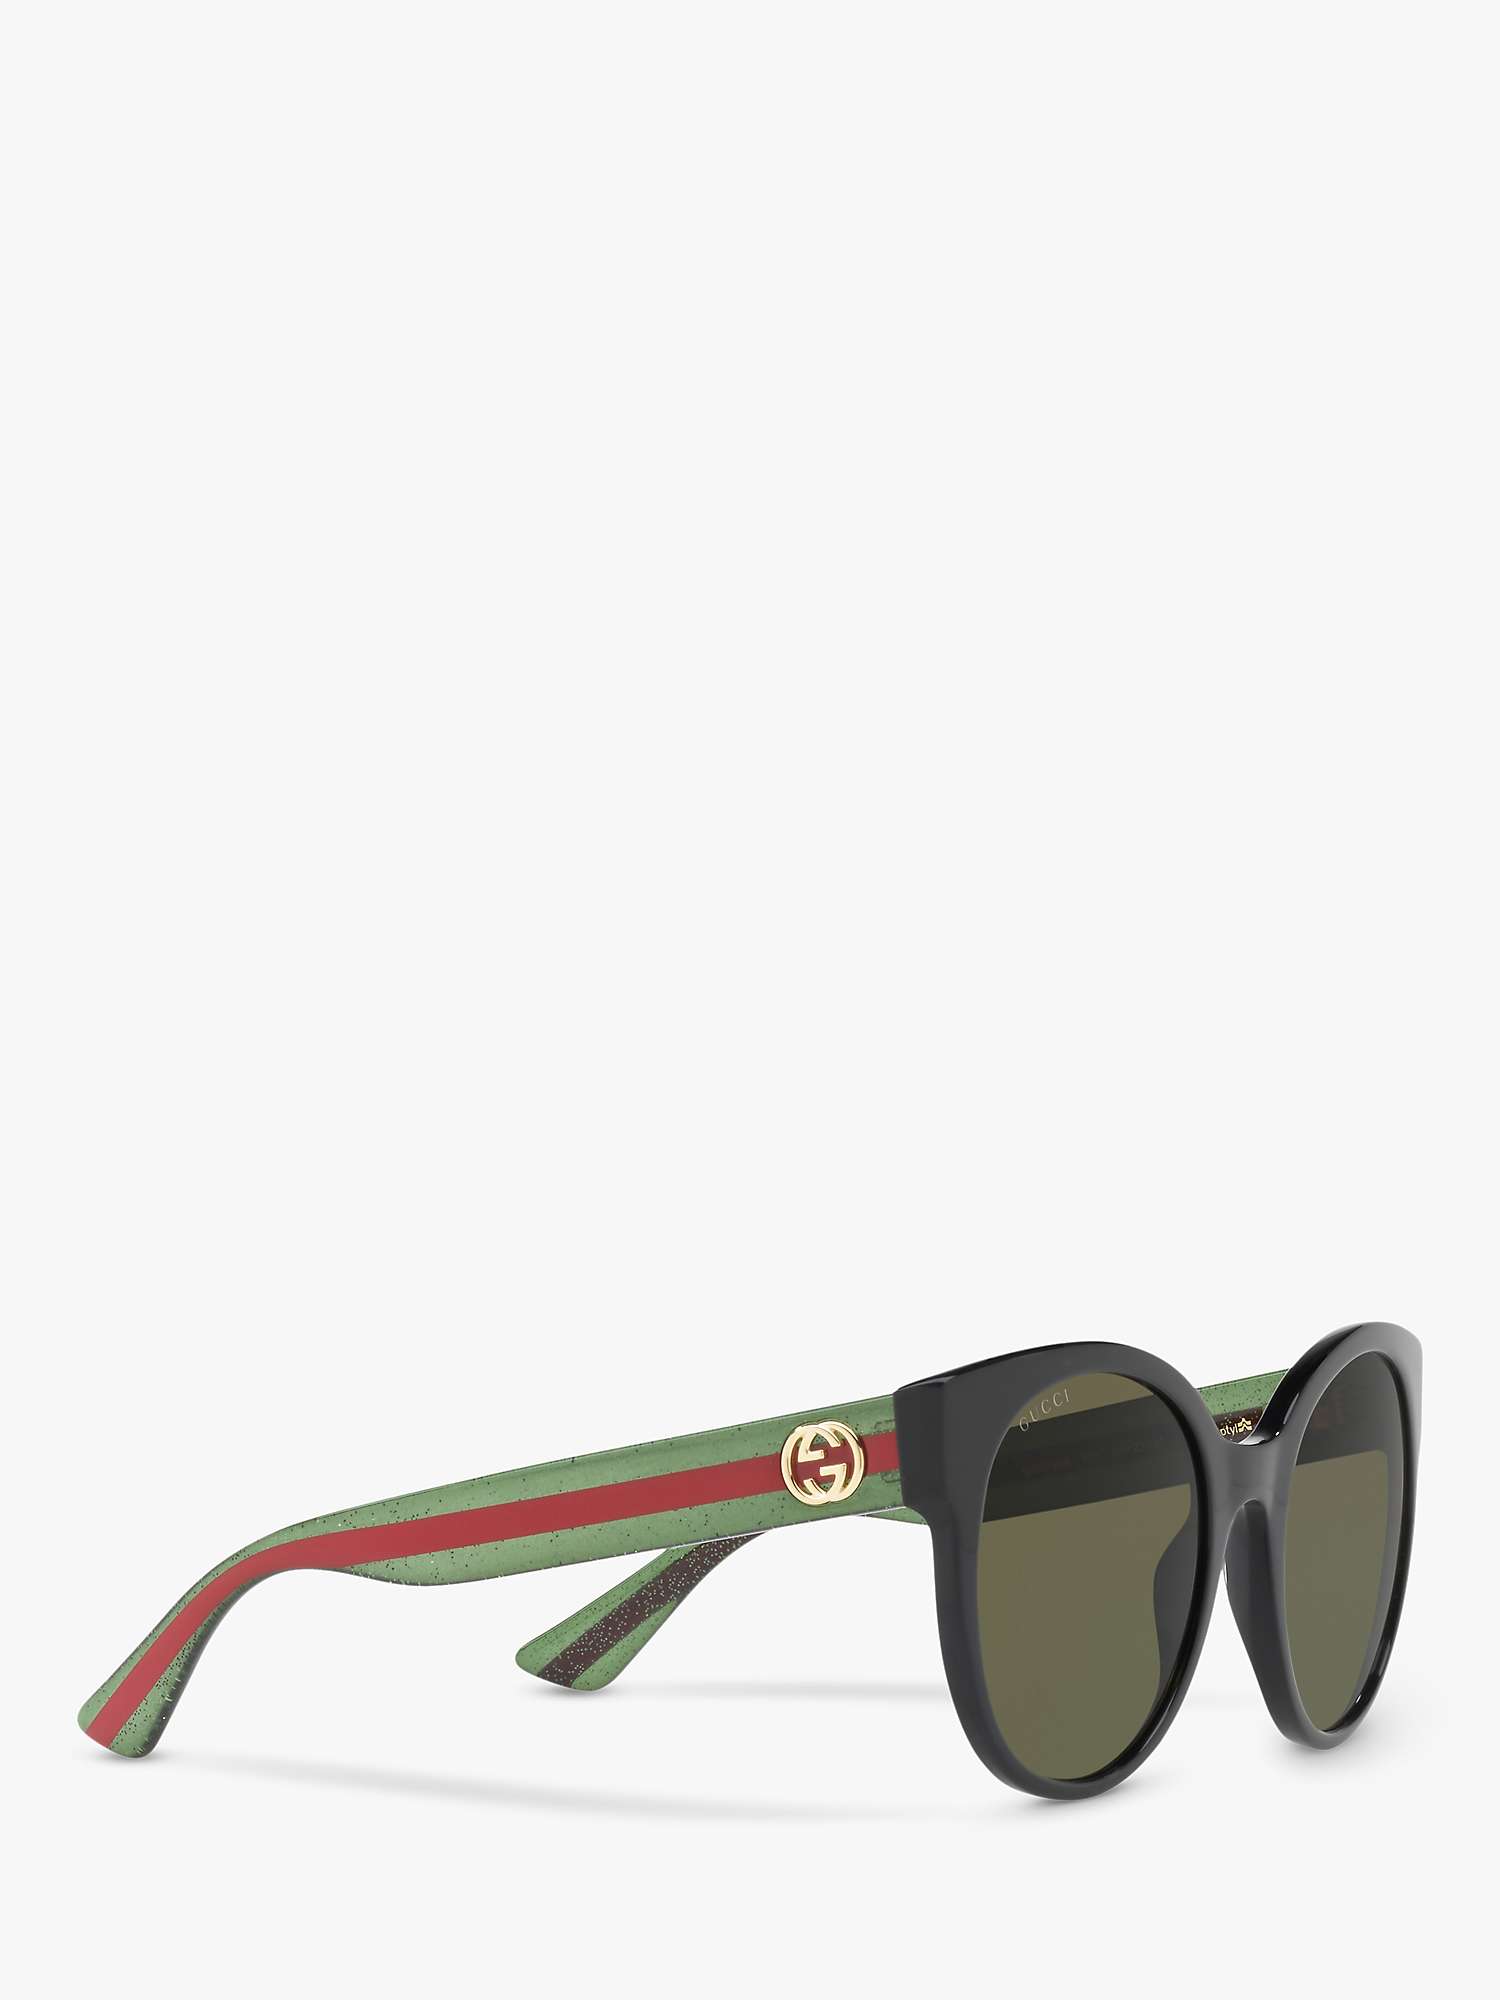 Buy Gucci GG0035SN Women's Round Sunglasses, Black/Green Online at johnlewis.com